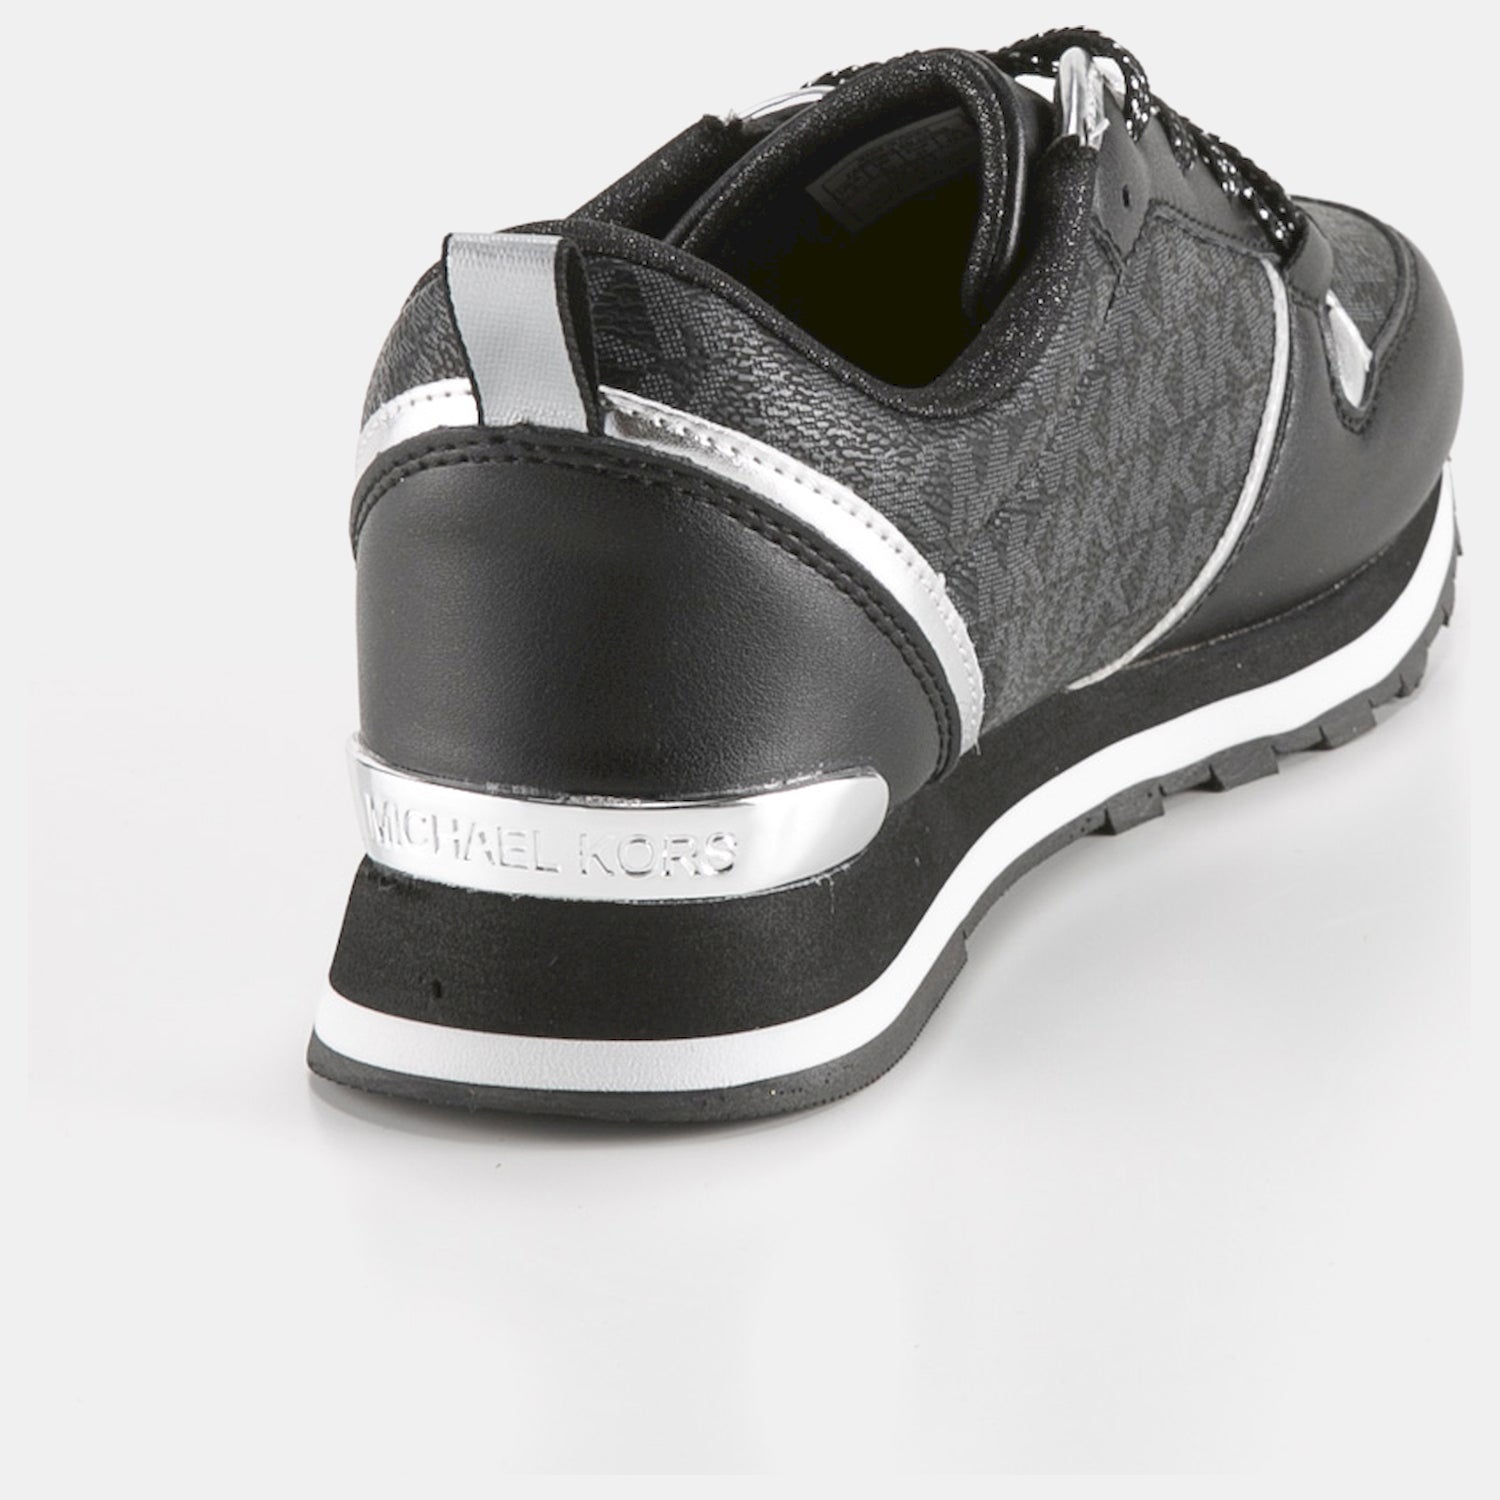 Michael Kors Sapatilhas Sneakers Shoes Billie Dash Black Preto_shot2